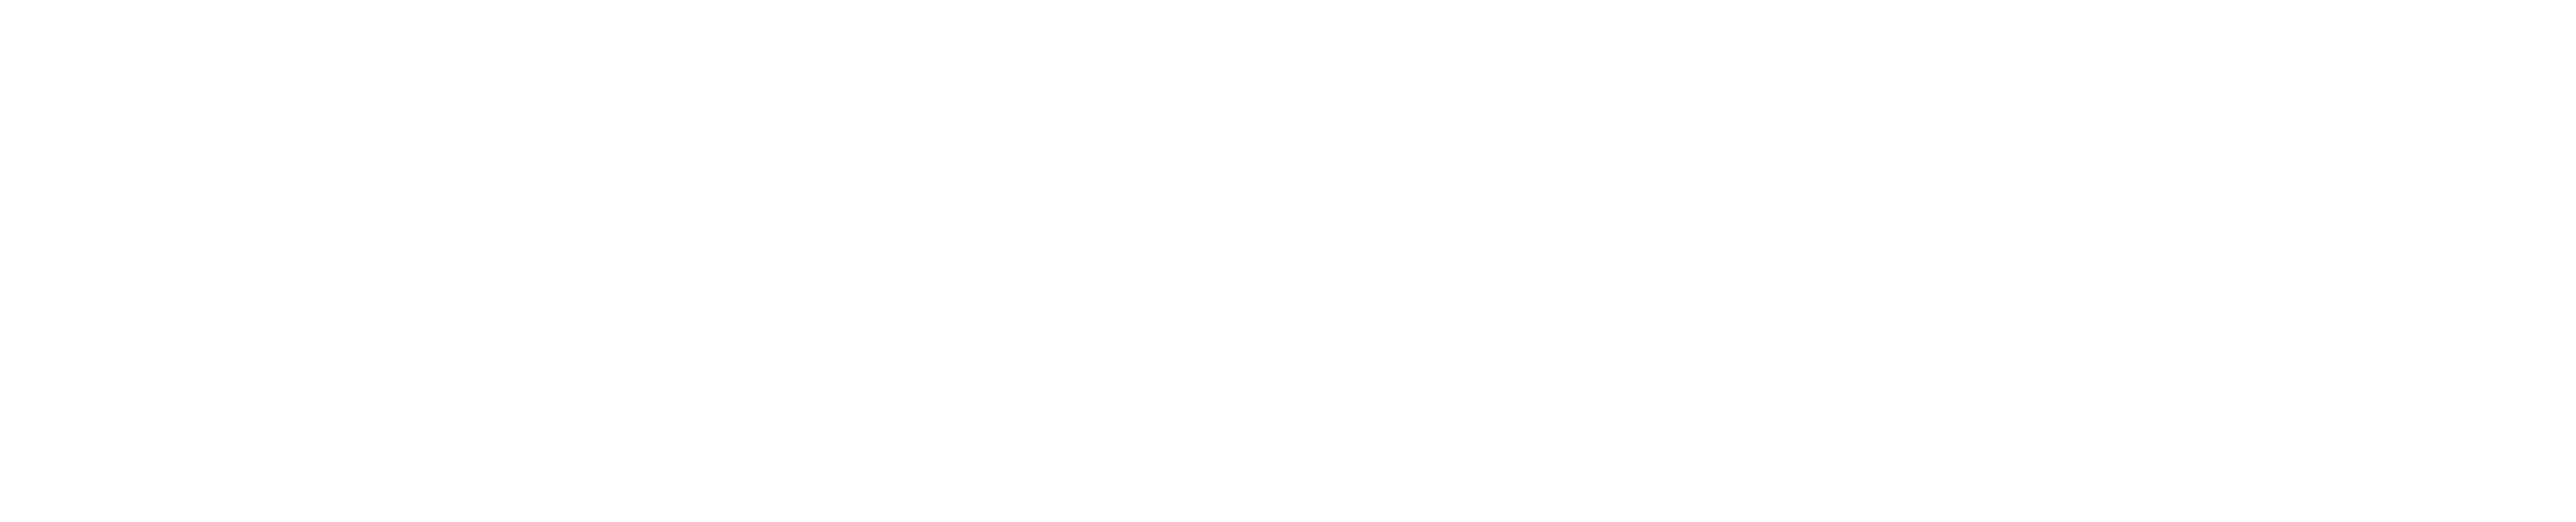 RPX Technologies Letterhead Logo White